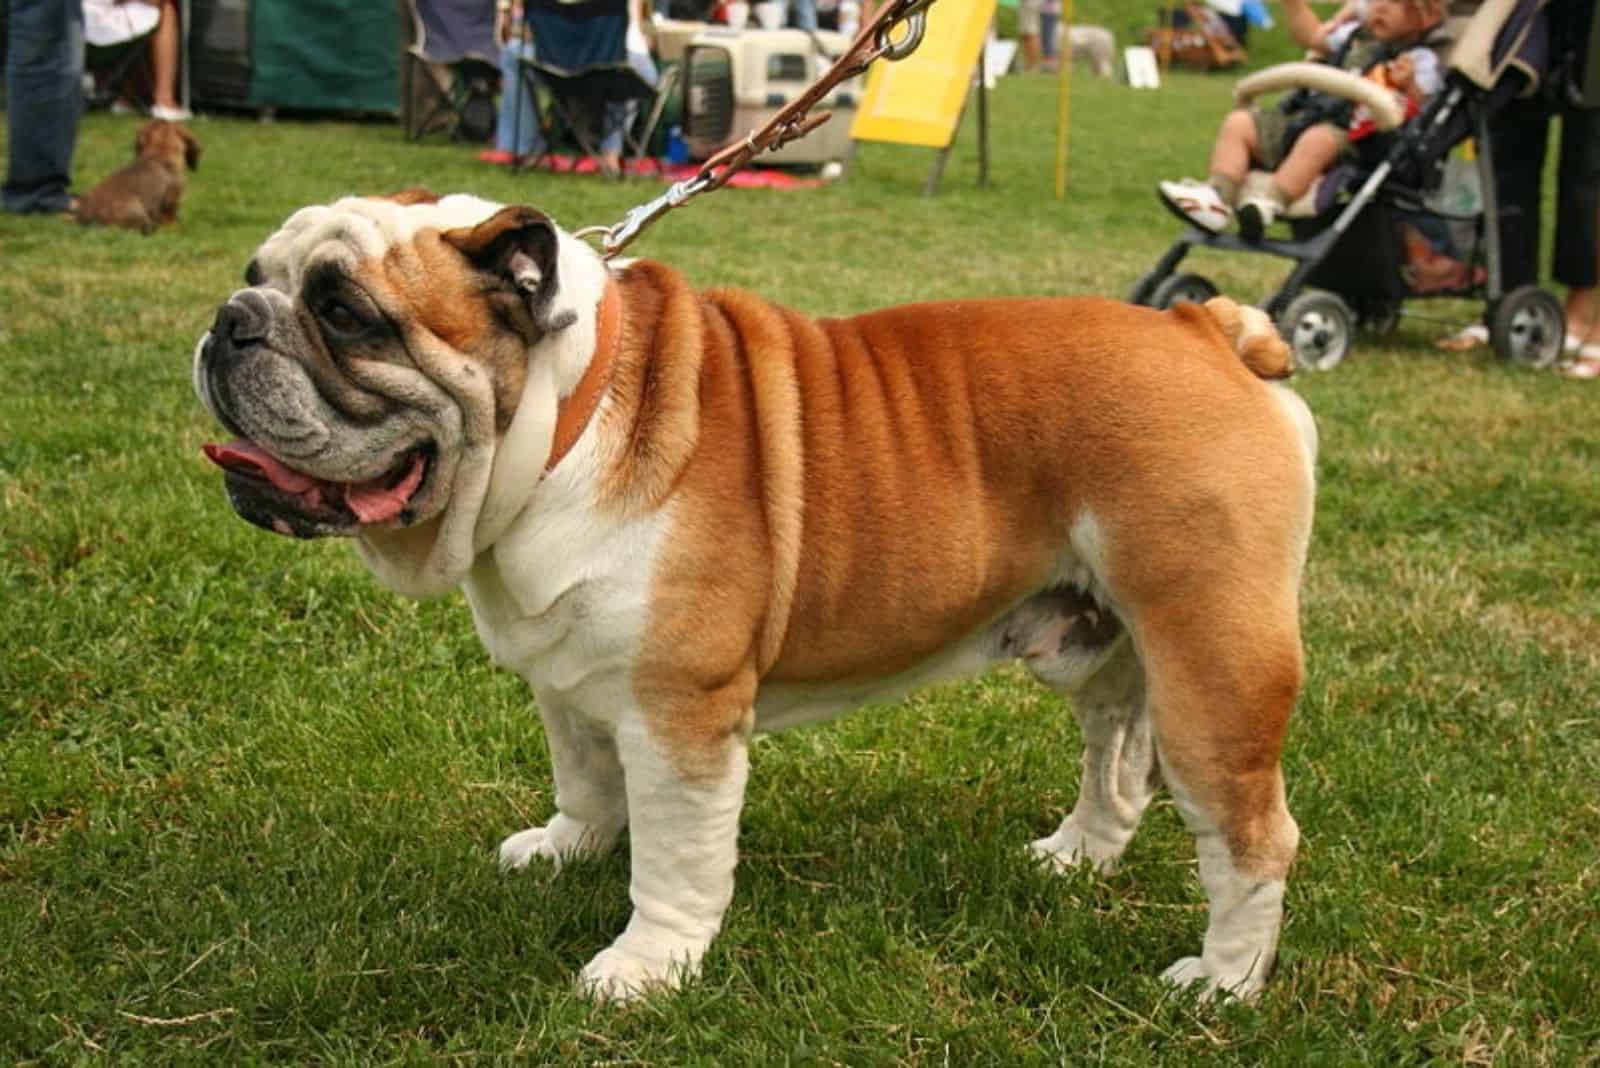 English Bulldog Pug Mix stands on the grass